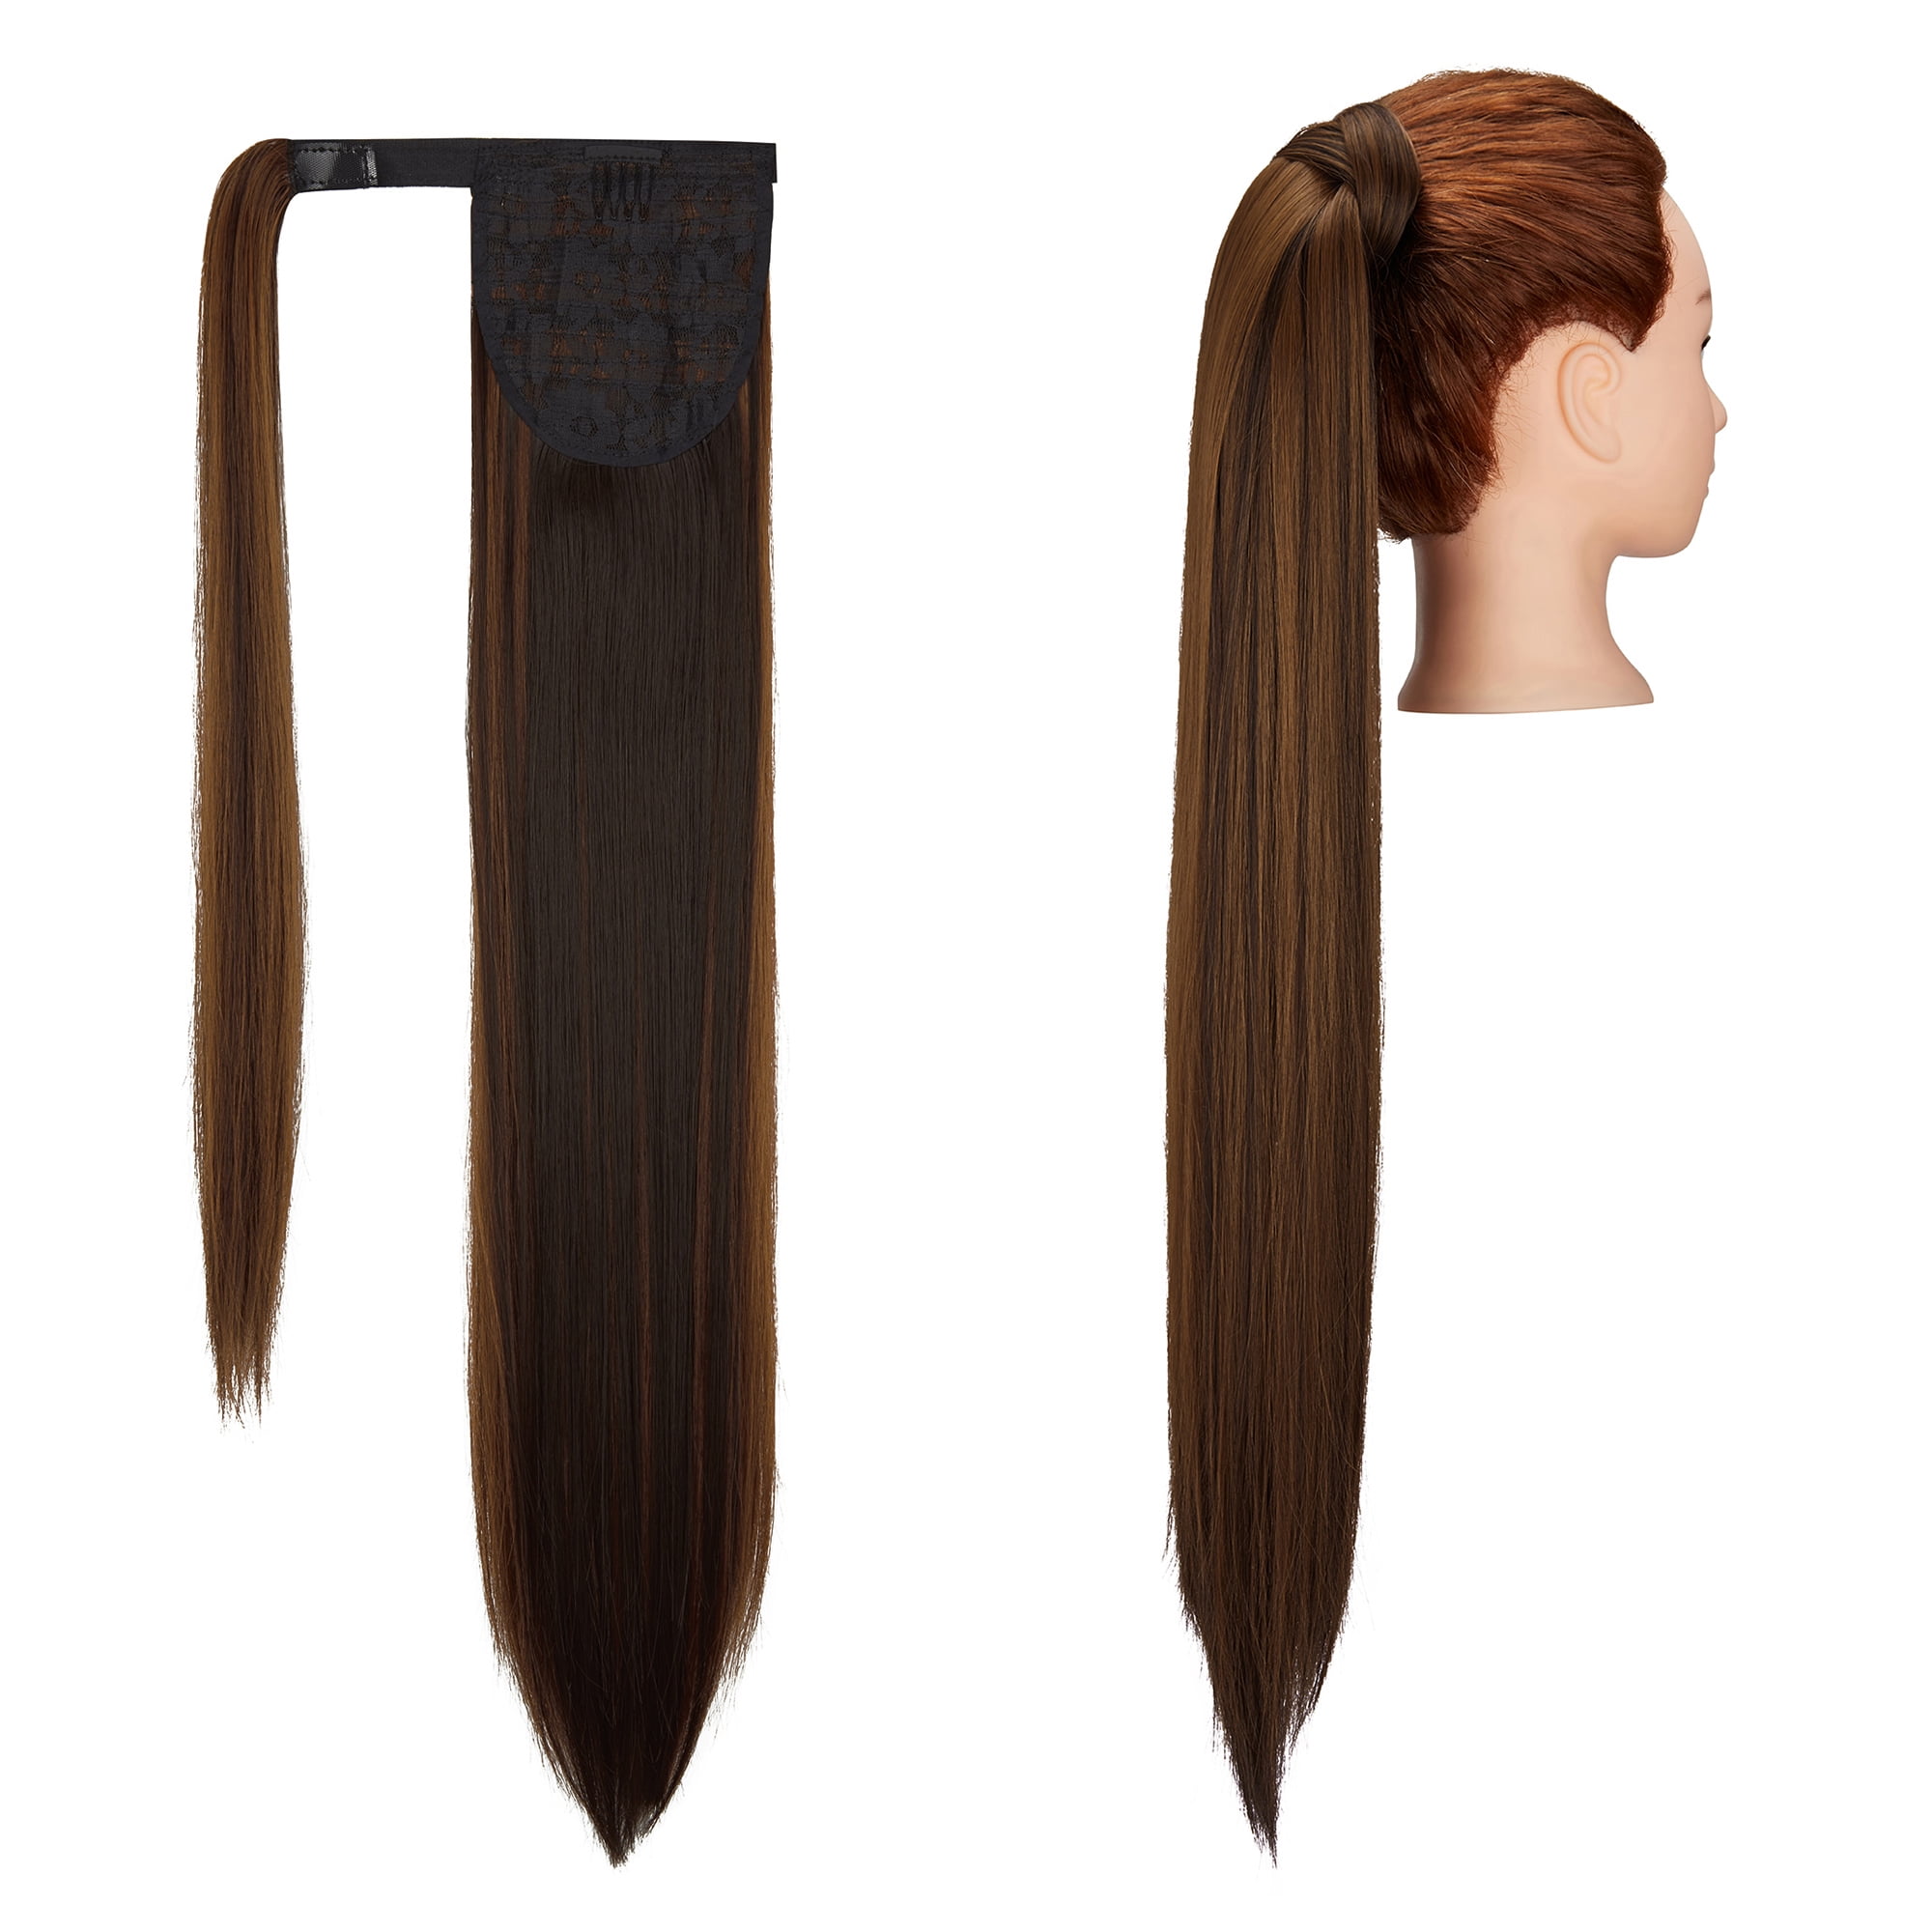 SHCKE Straight Hair Ponytail Extension 20/28 Long Wrap Around